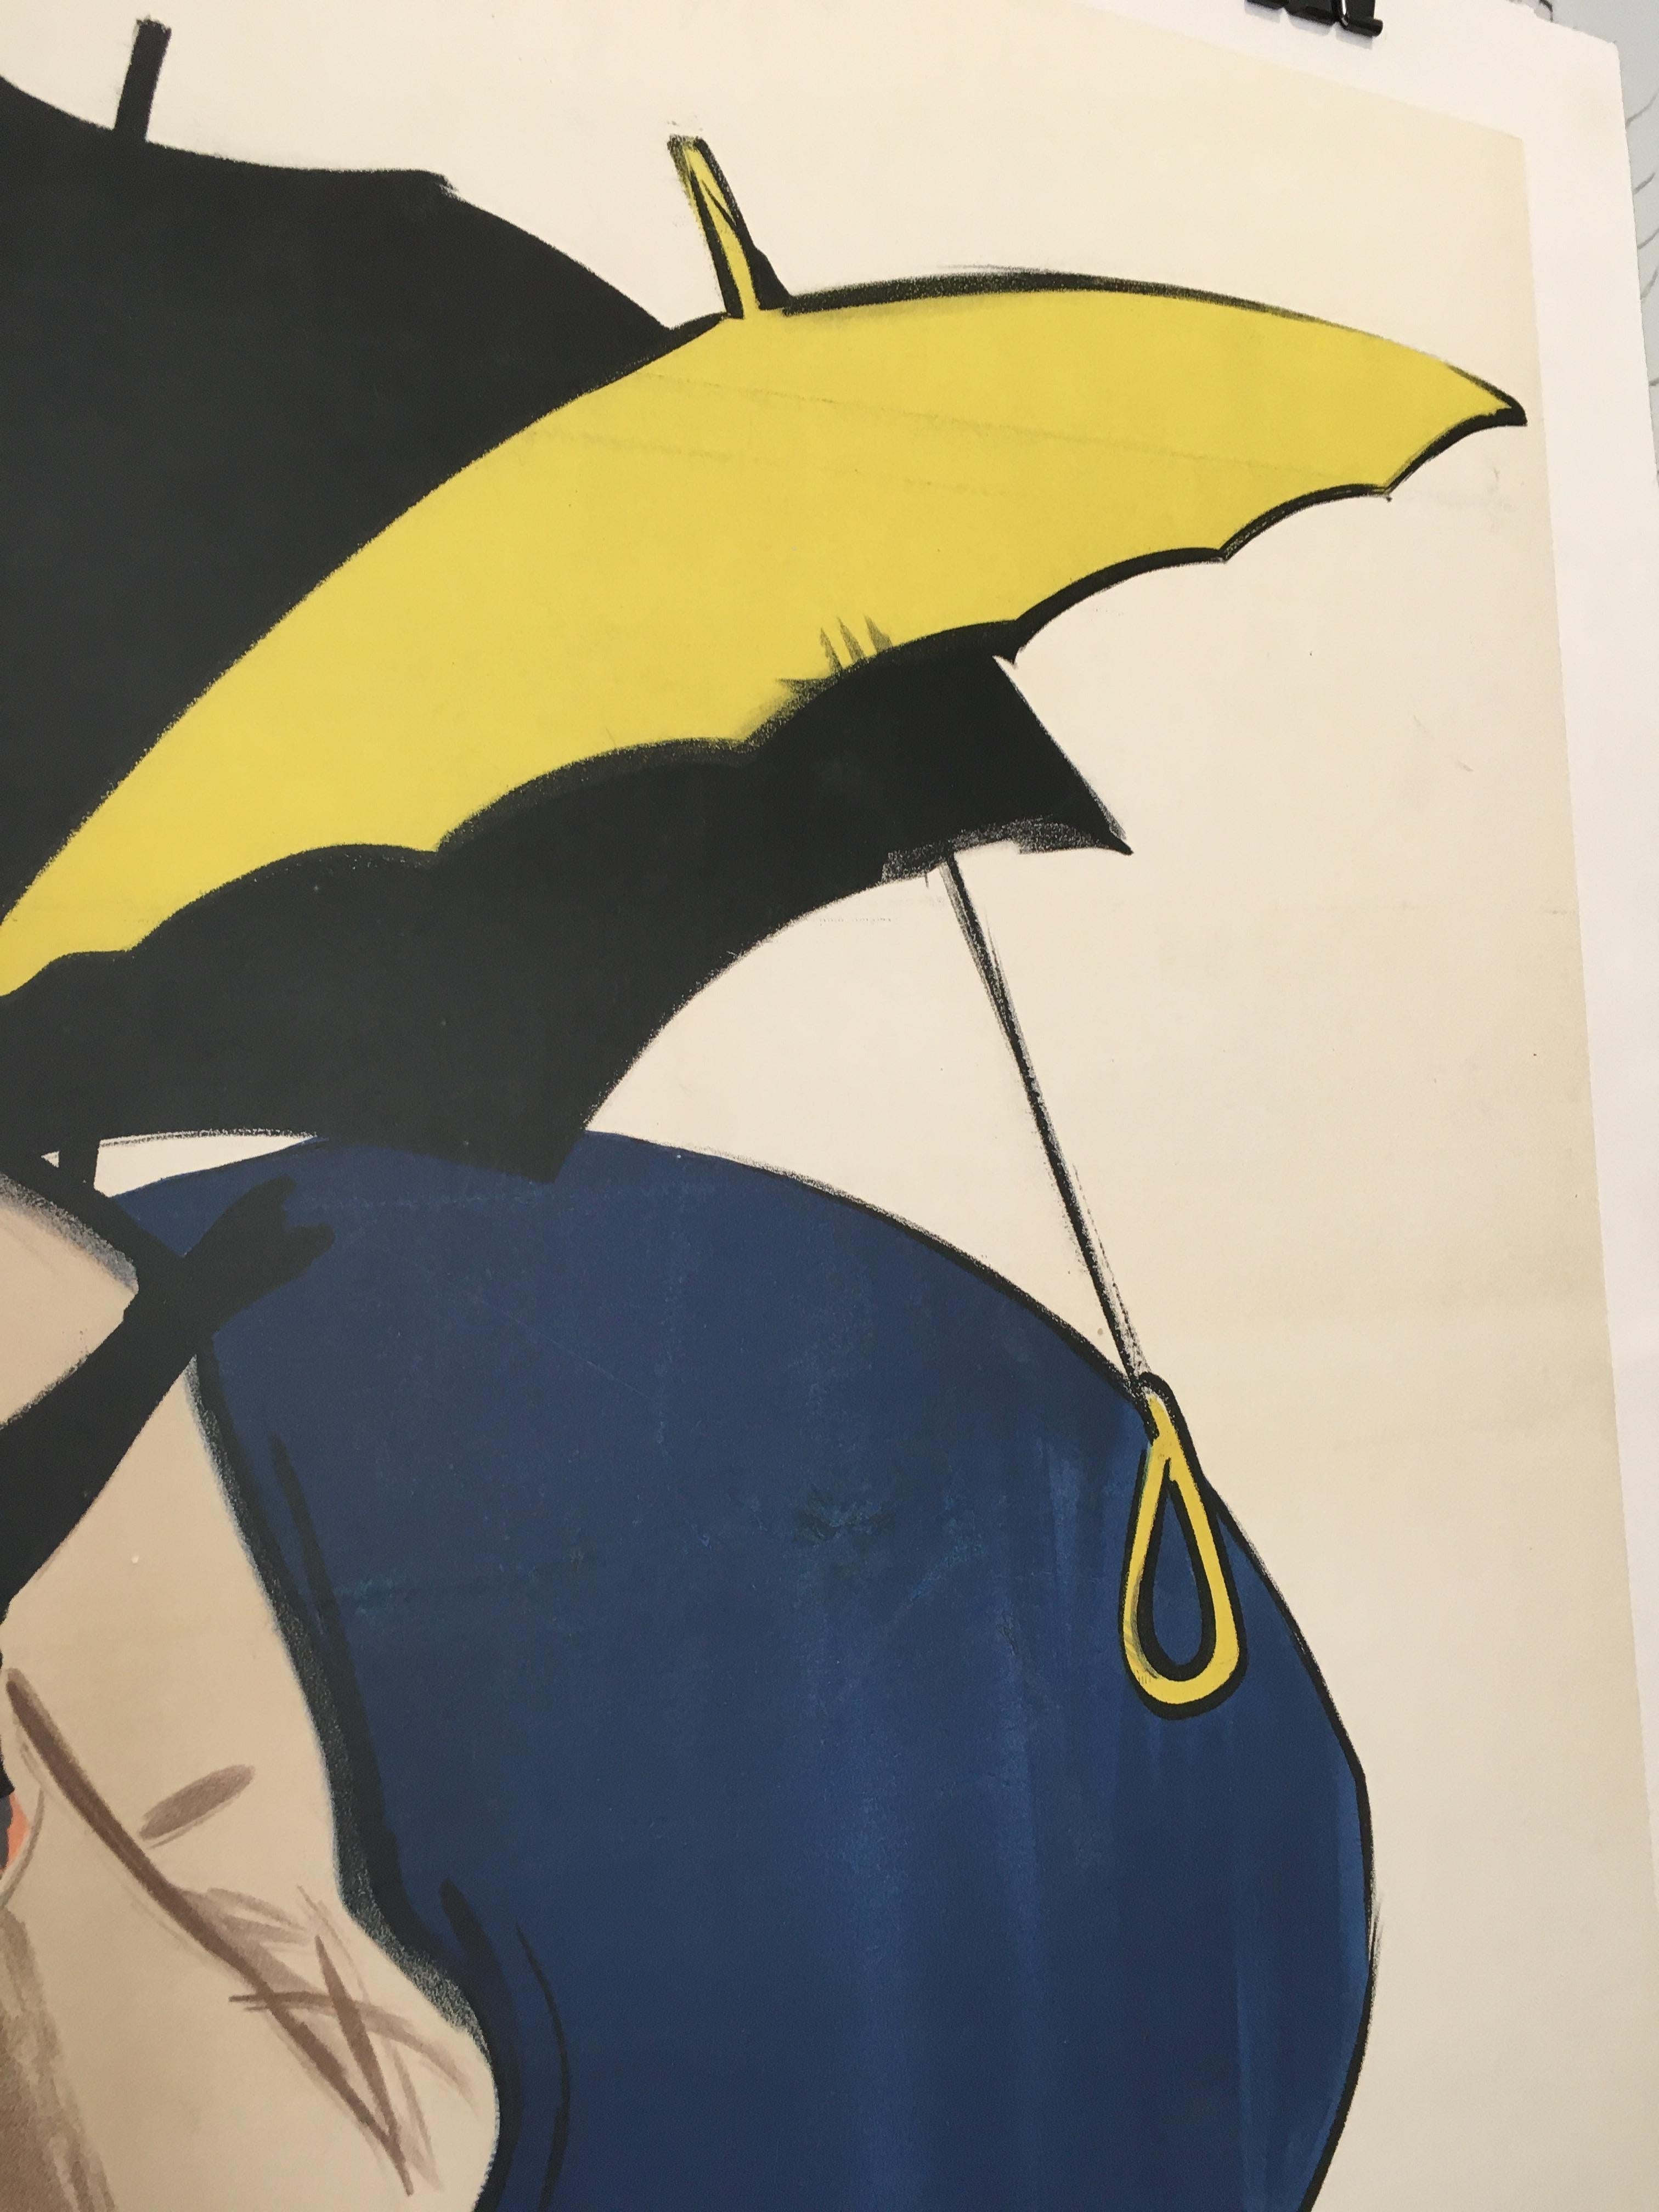 Mid-Century Modern Original Vintage French Fashion Advertisement Poster Blizzand Umbrellas by Gruau